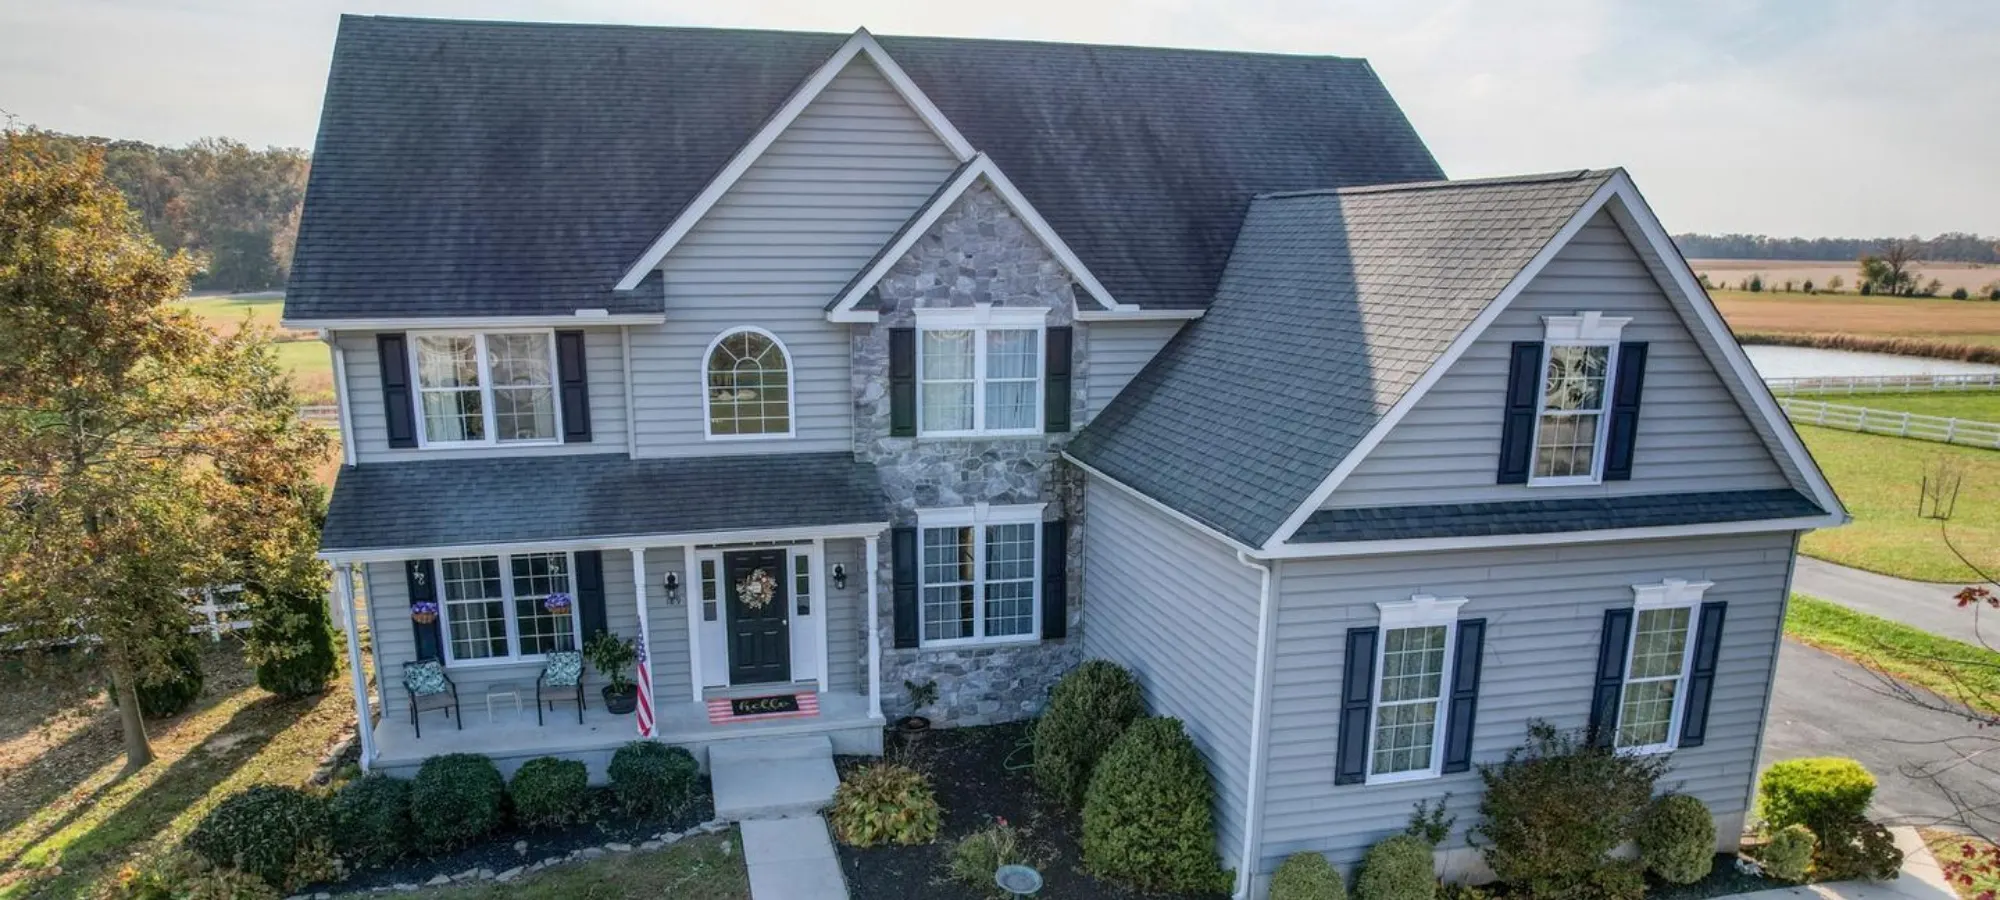 241_getmedia Delaware Real Estate | Find Your Dream Home with Burns & Ellis